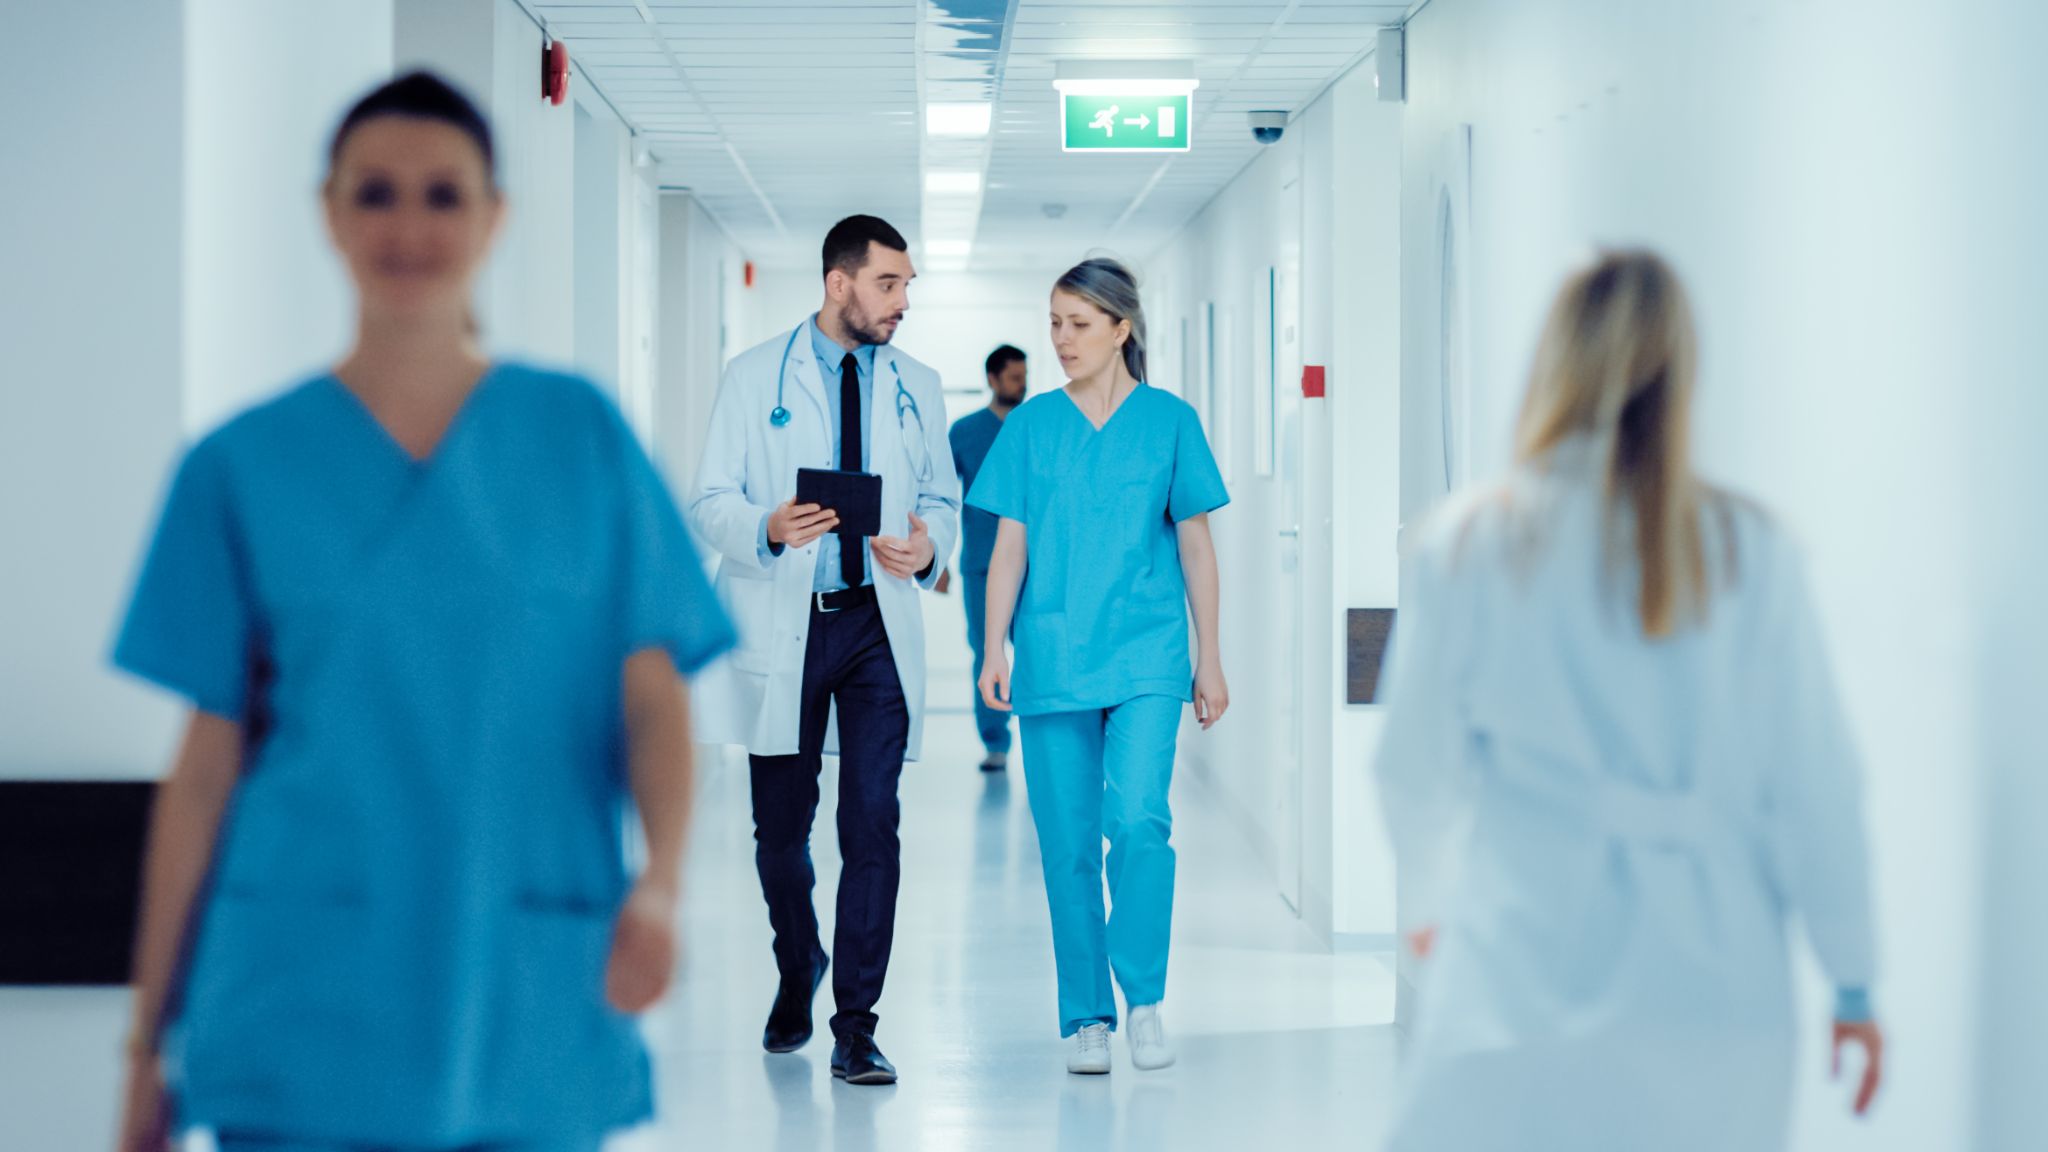 Surgeon and Female Doctor Walk Through Hospital Hallway